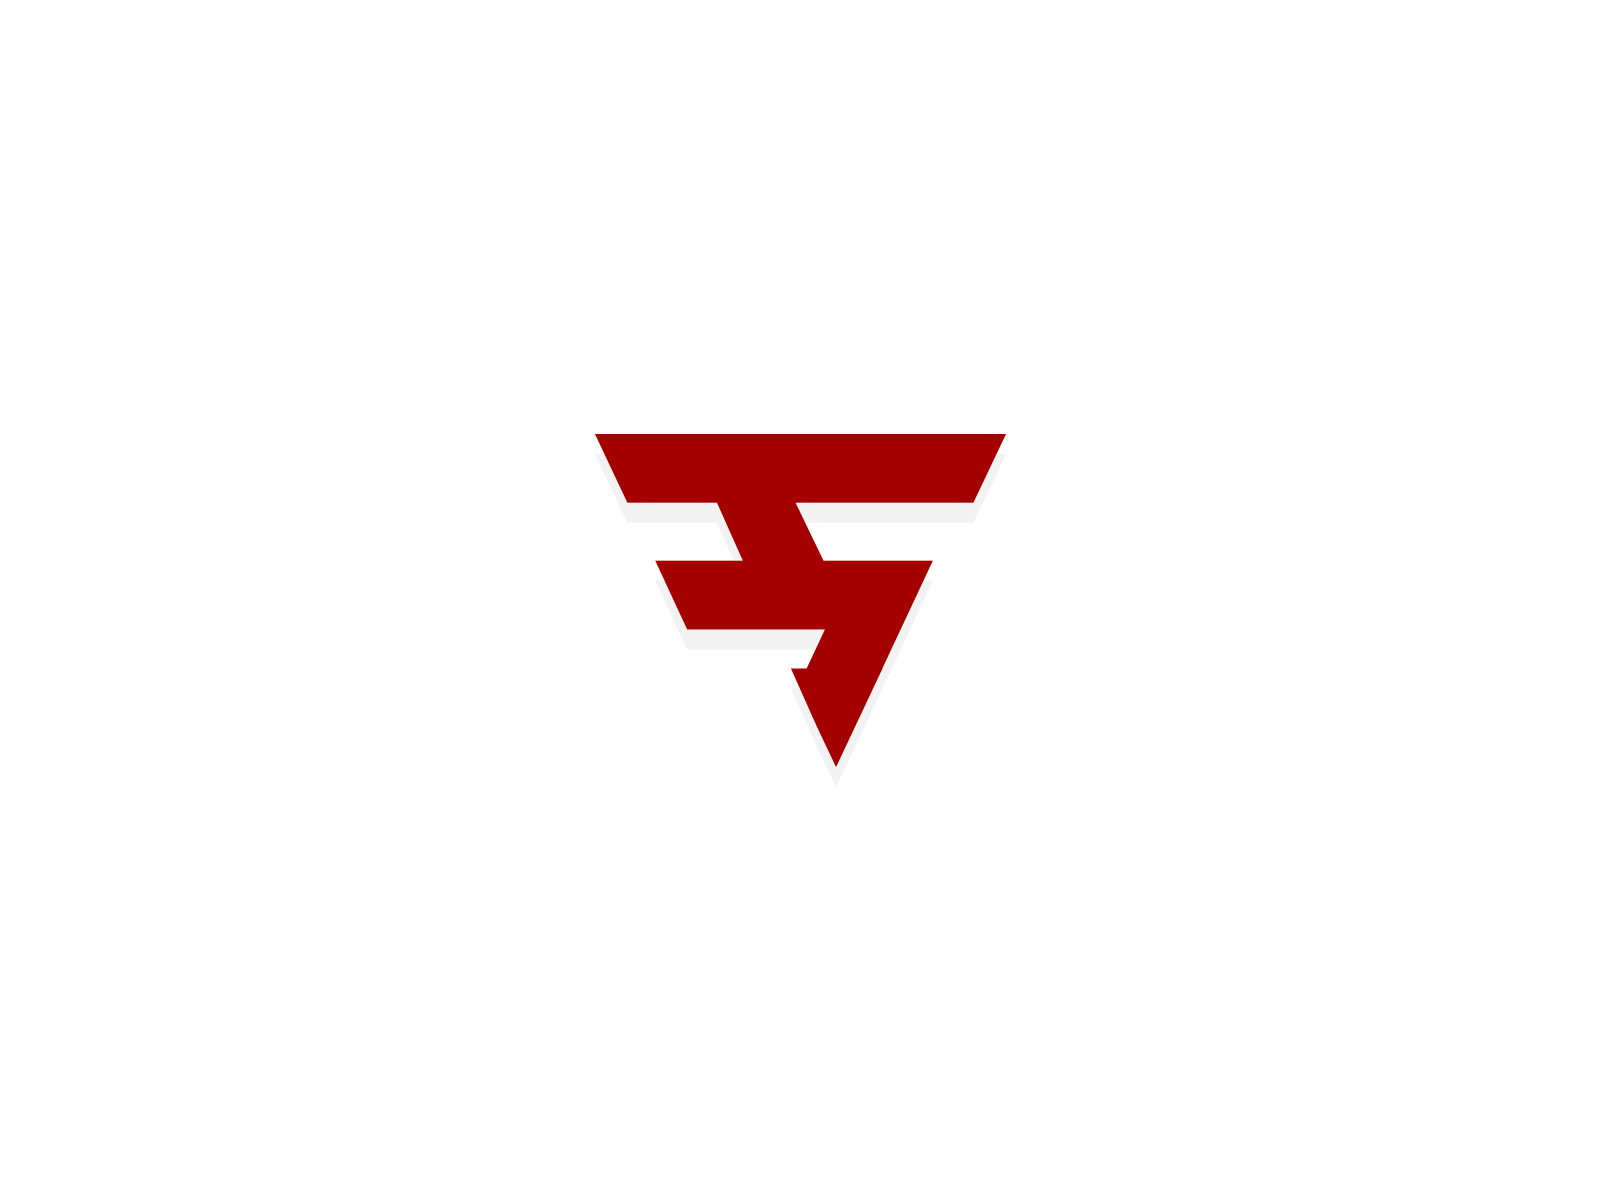 Faze Clan" Logo 2.0 by Matthieu.H on